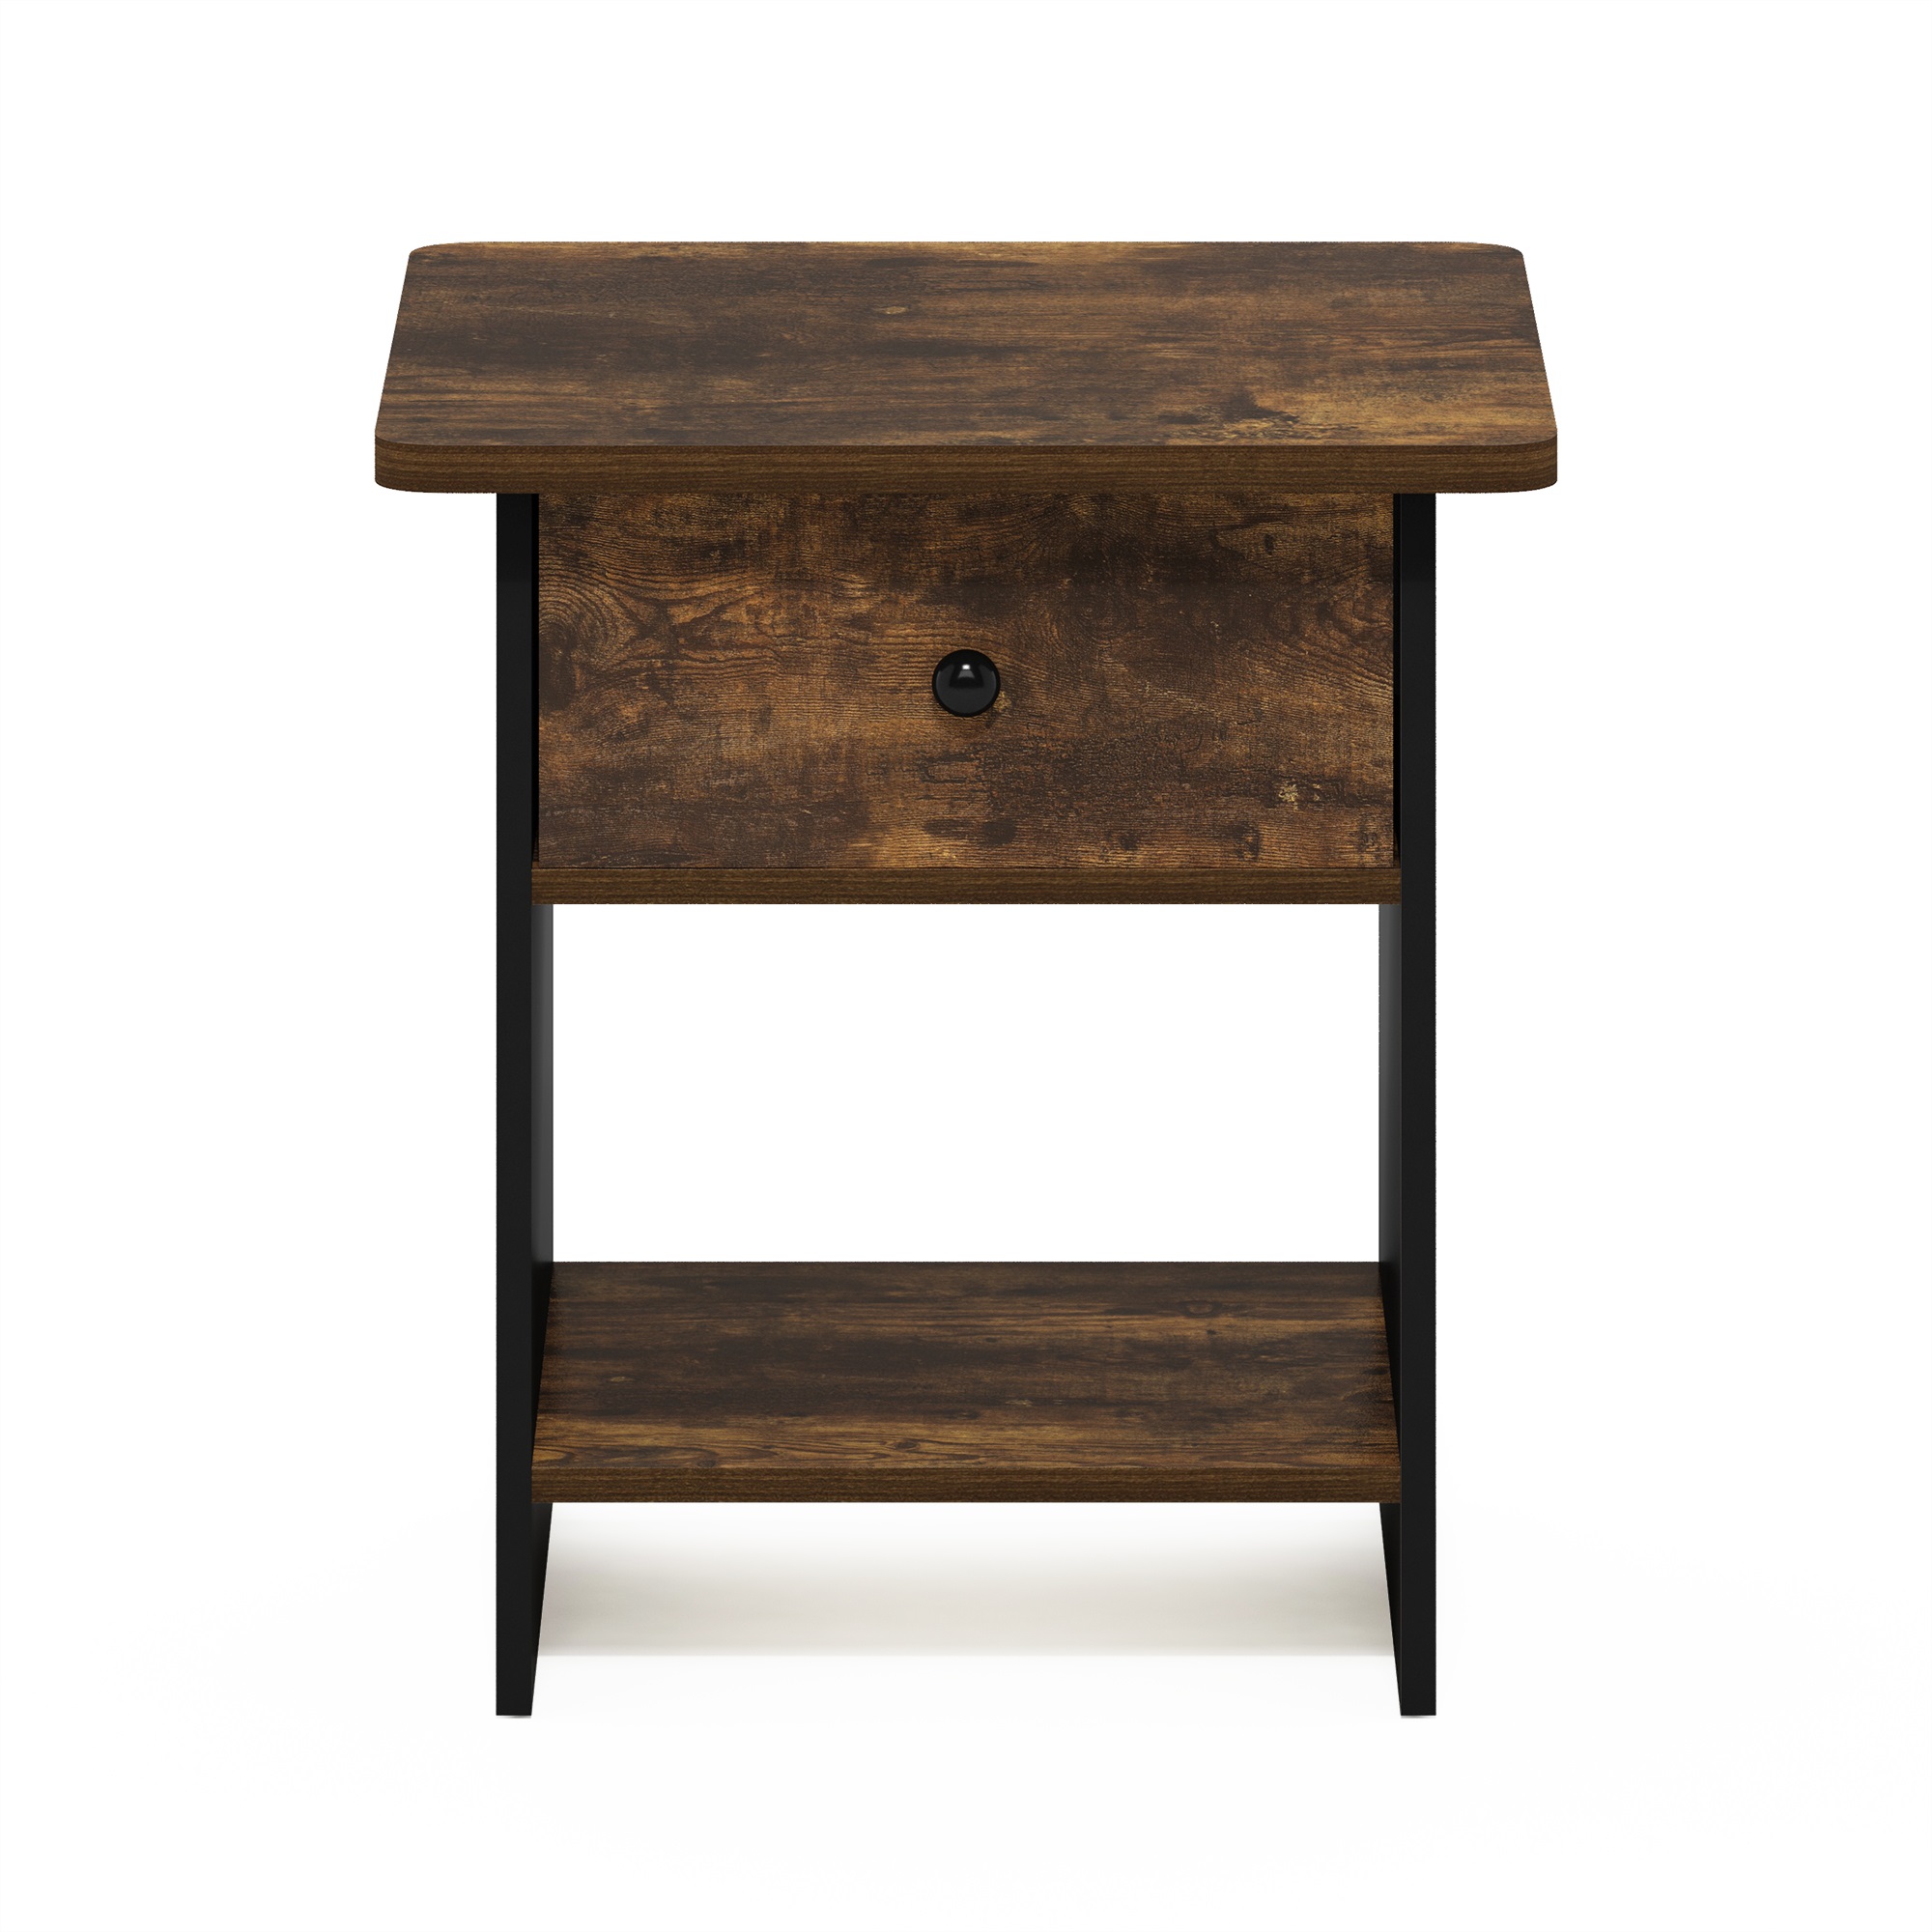 Sneak-Apeek Furinno Dario End Table/ Night Stand Storage Shelf with Bin Drawer, Amber Pine/Black